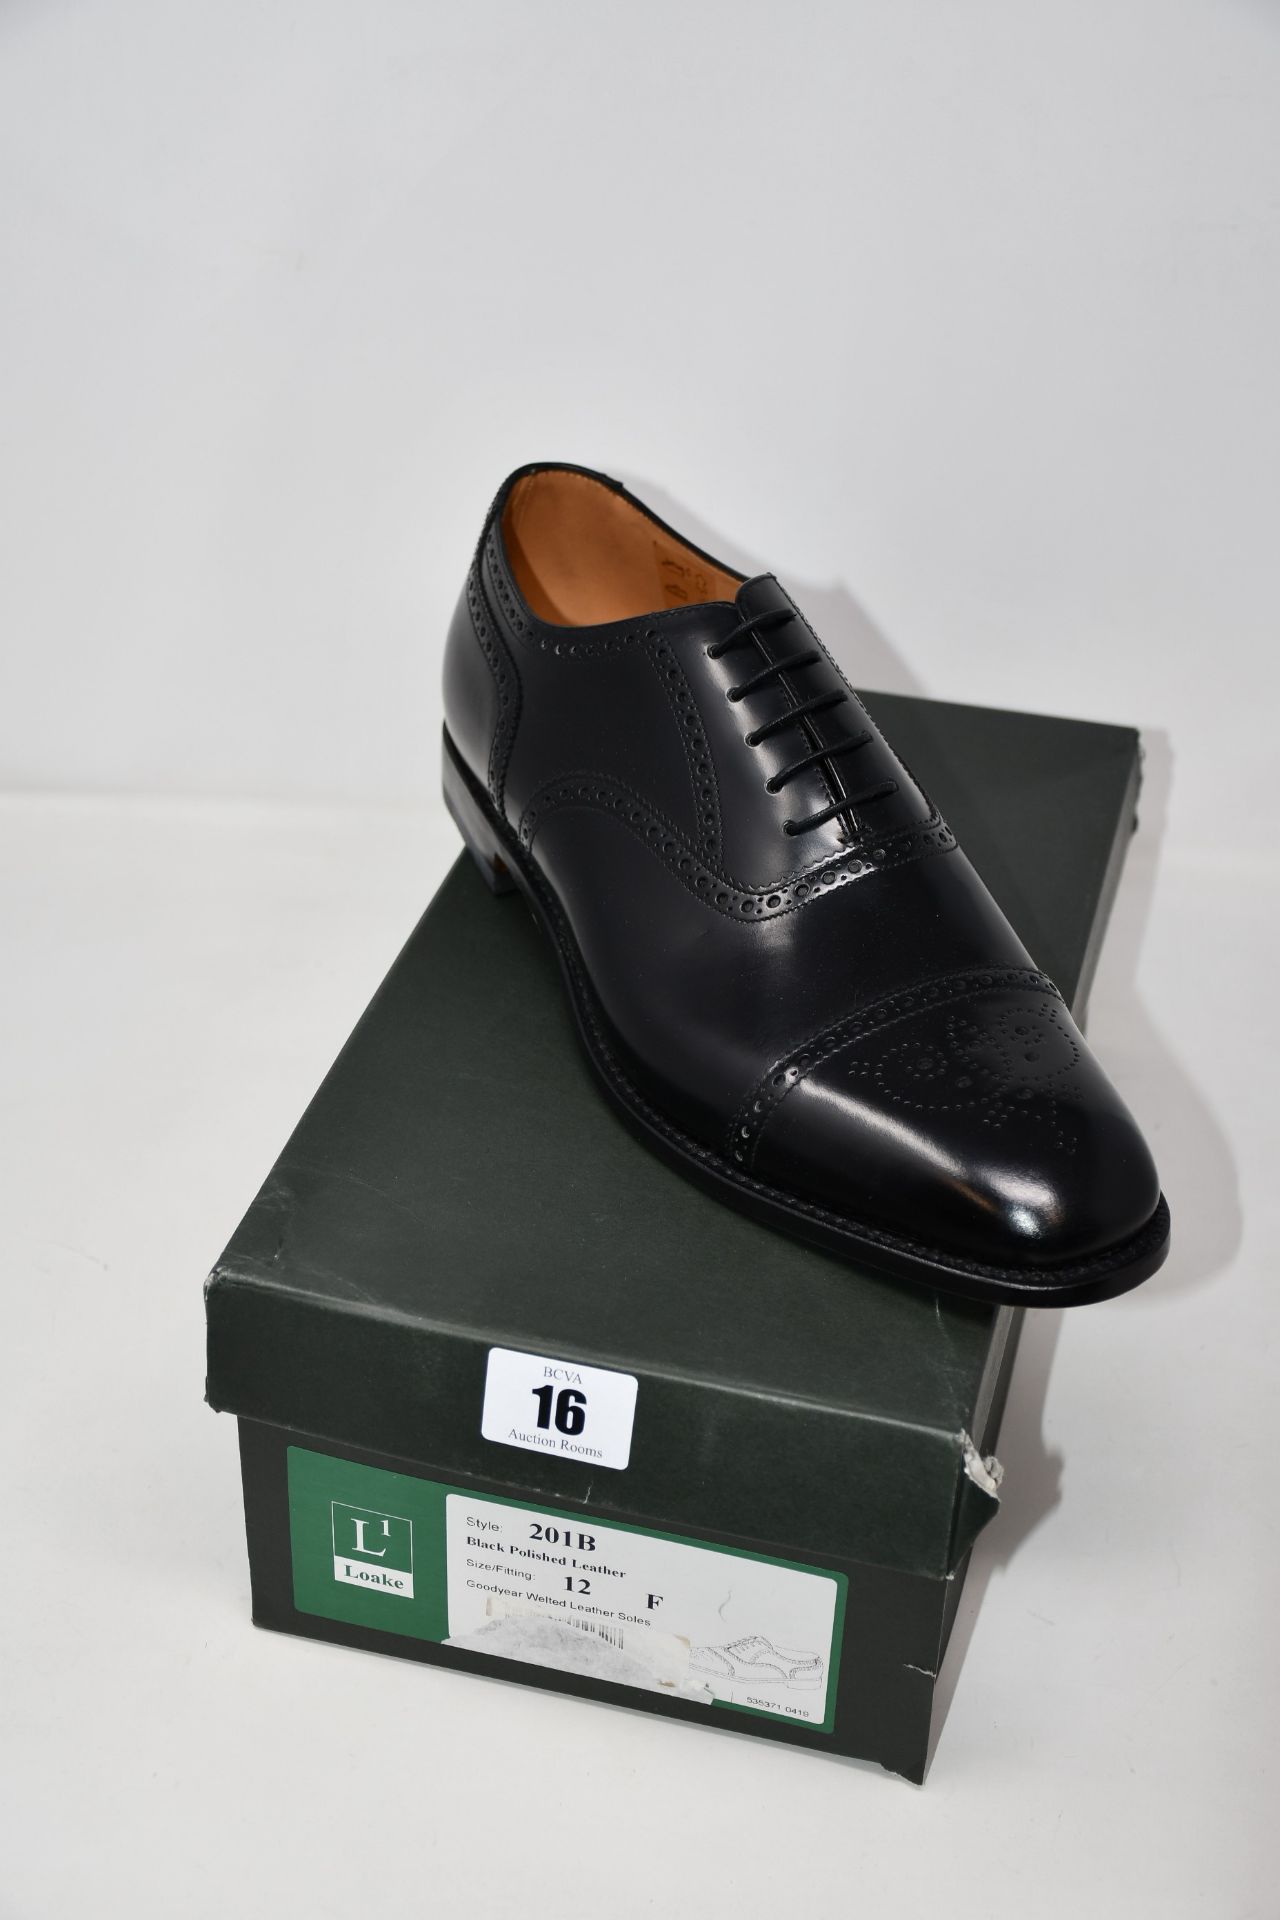 A pair of men's as new Loake 201B Semi-brogue shoes (UK 12F).